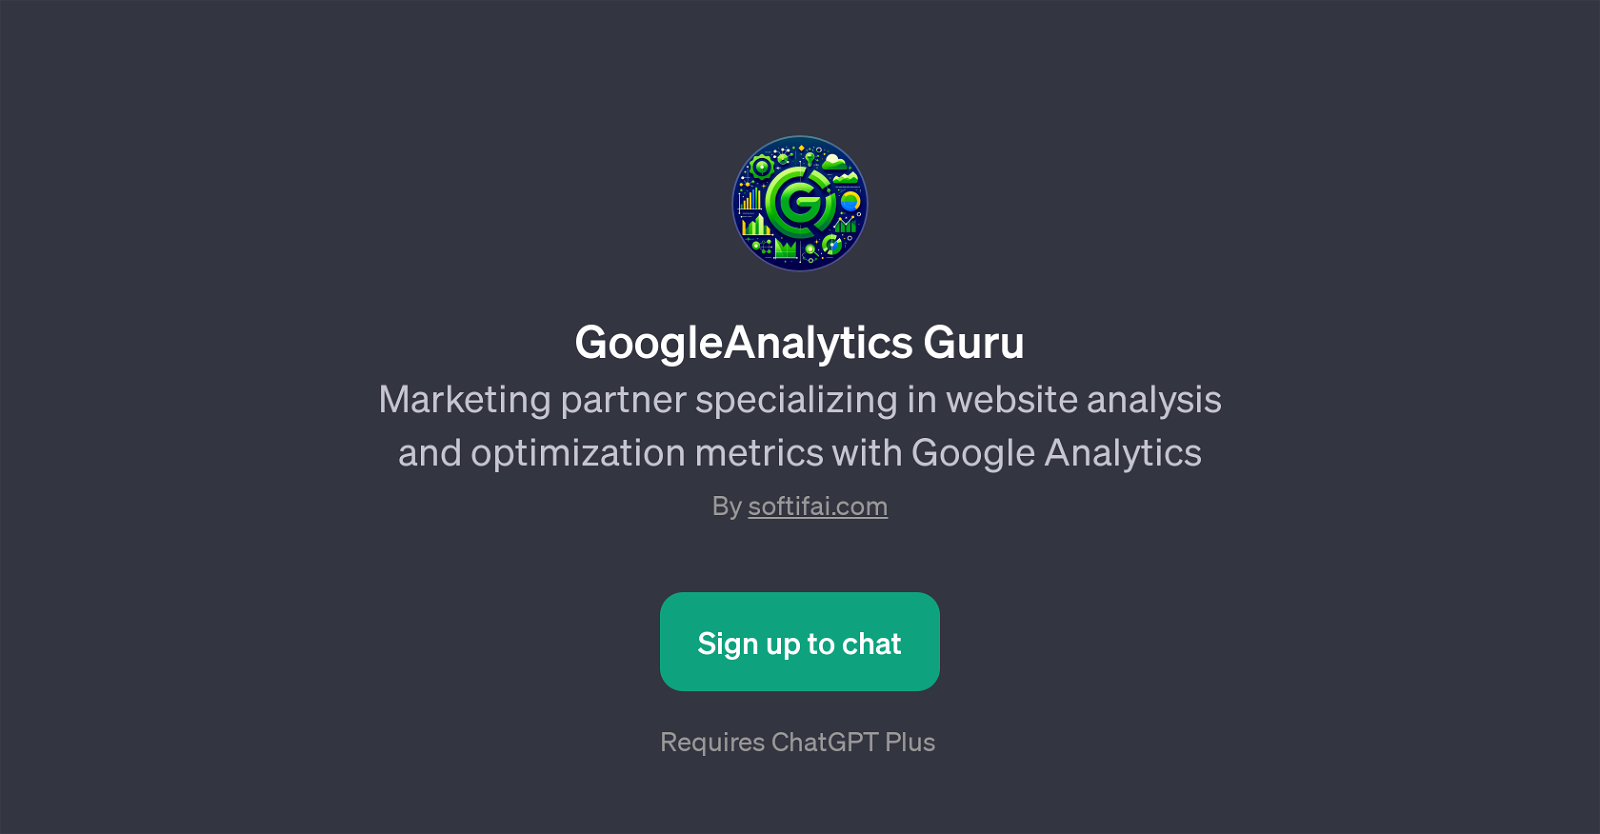 GoogleAnalytics Guru website